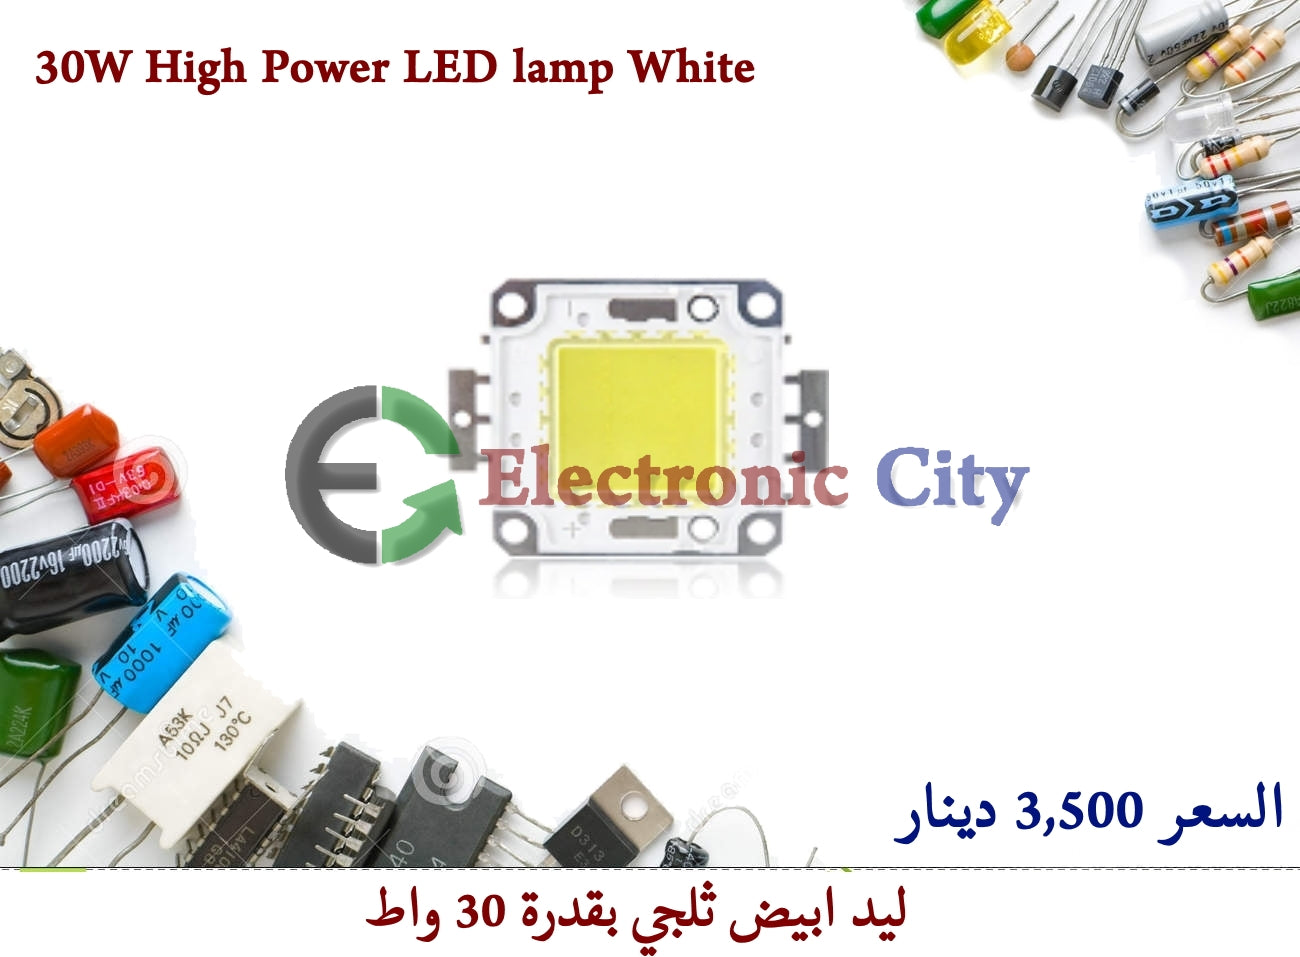 30W High Power LED lamp White